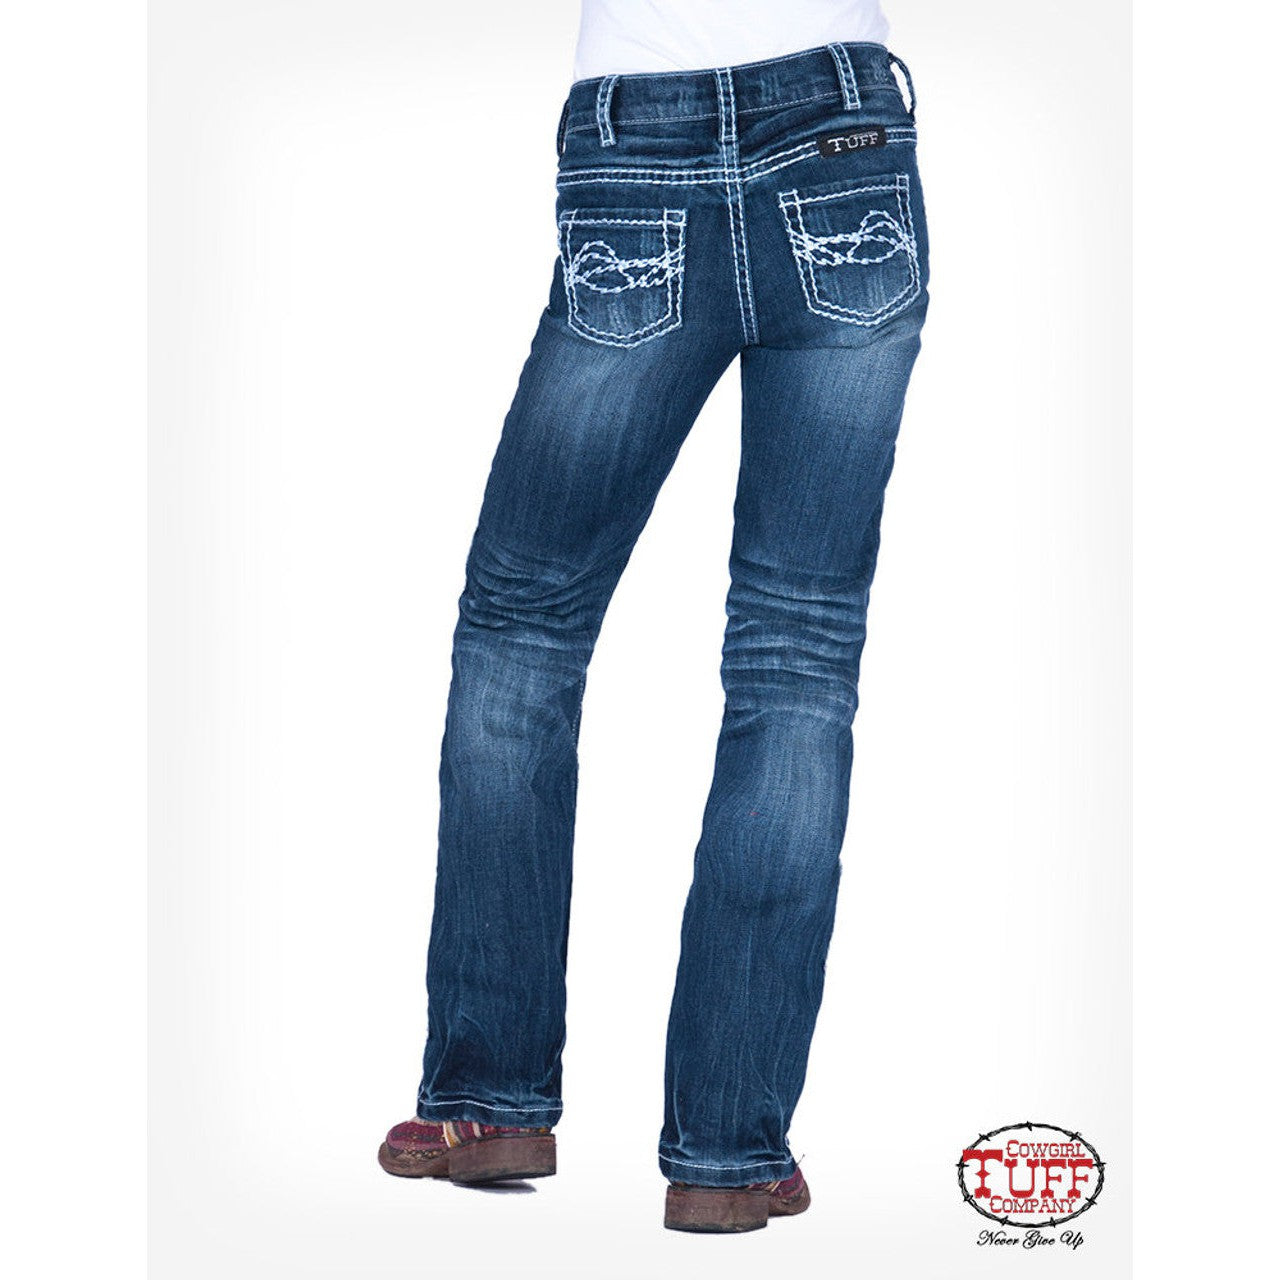 Cowgirl Tuff Girl's Edgy Jeans - Medium Wash